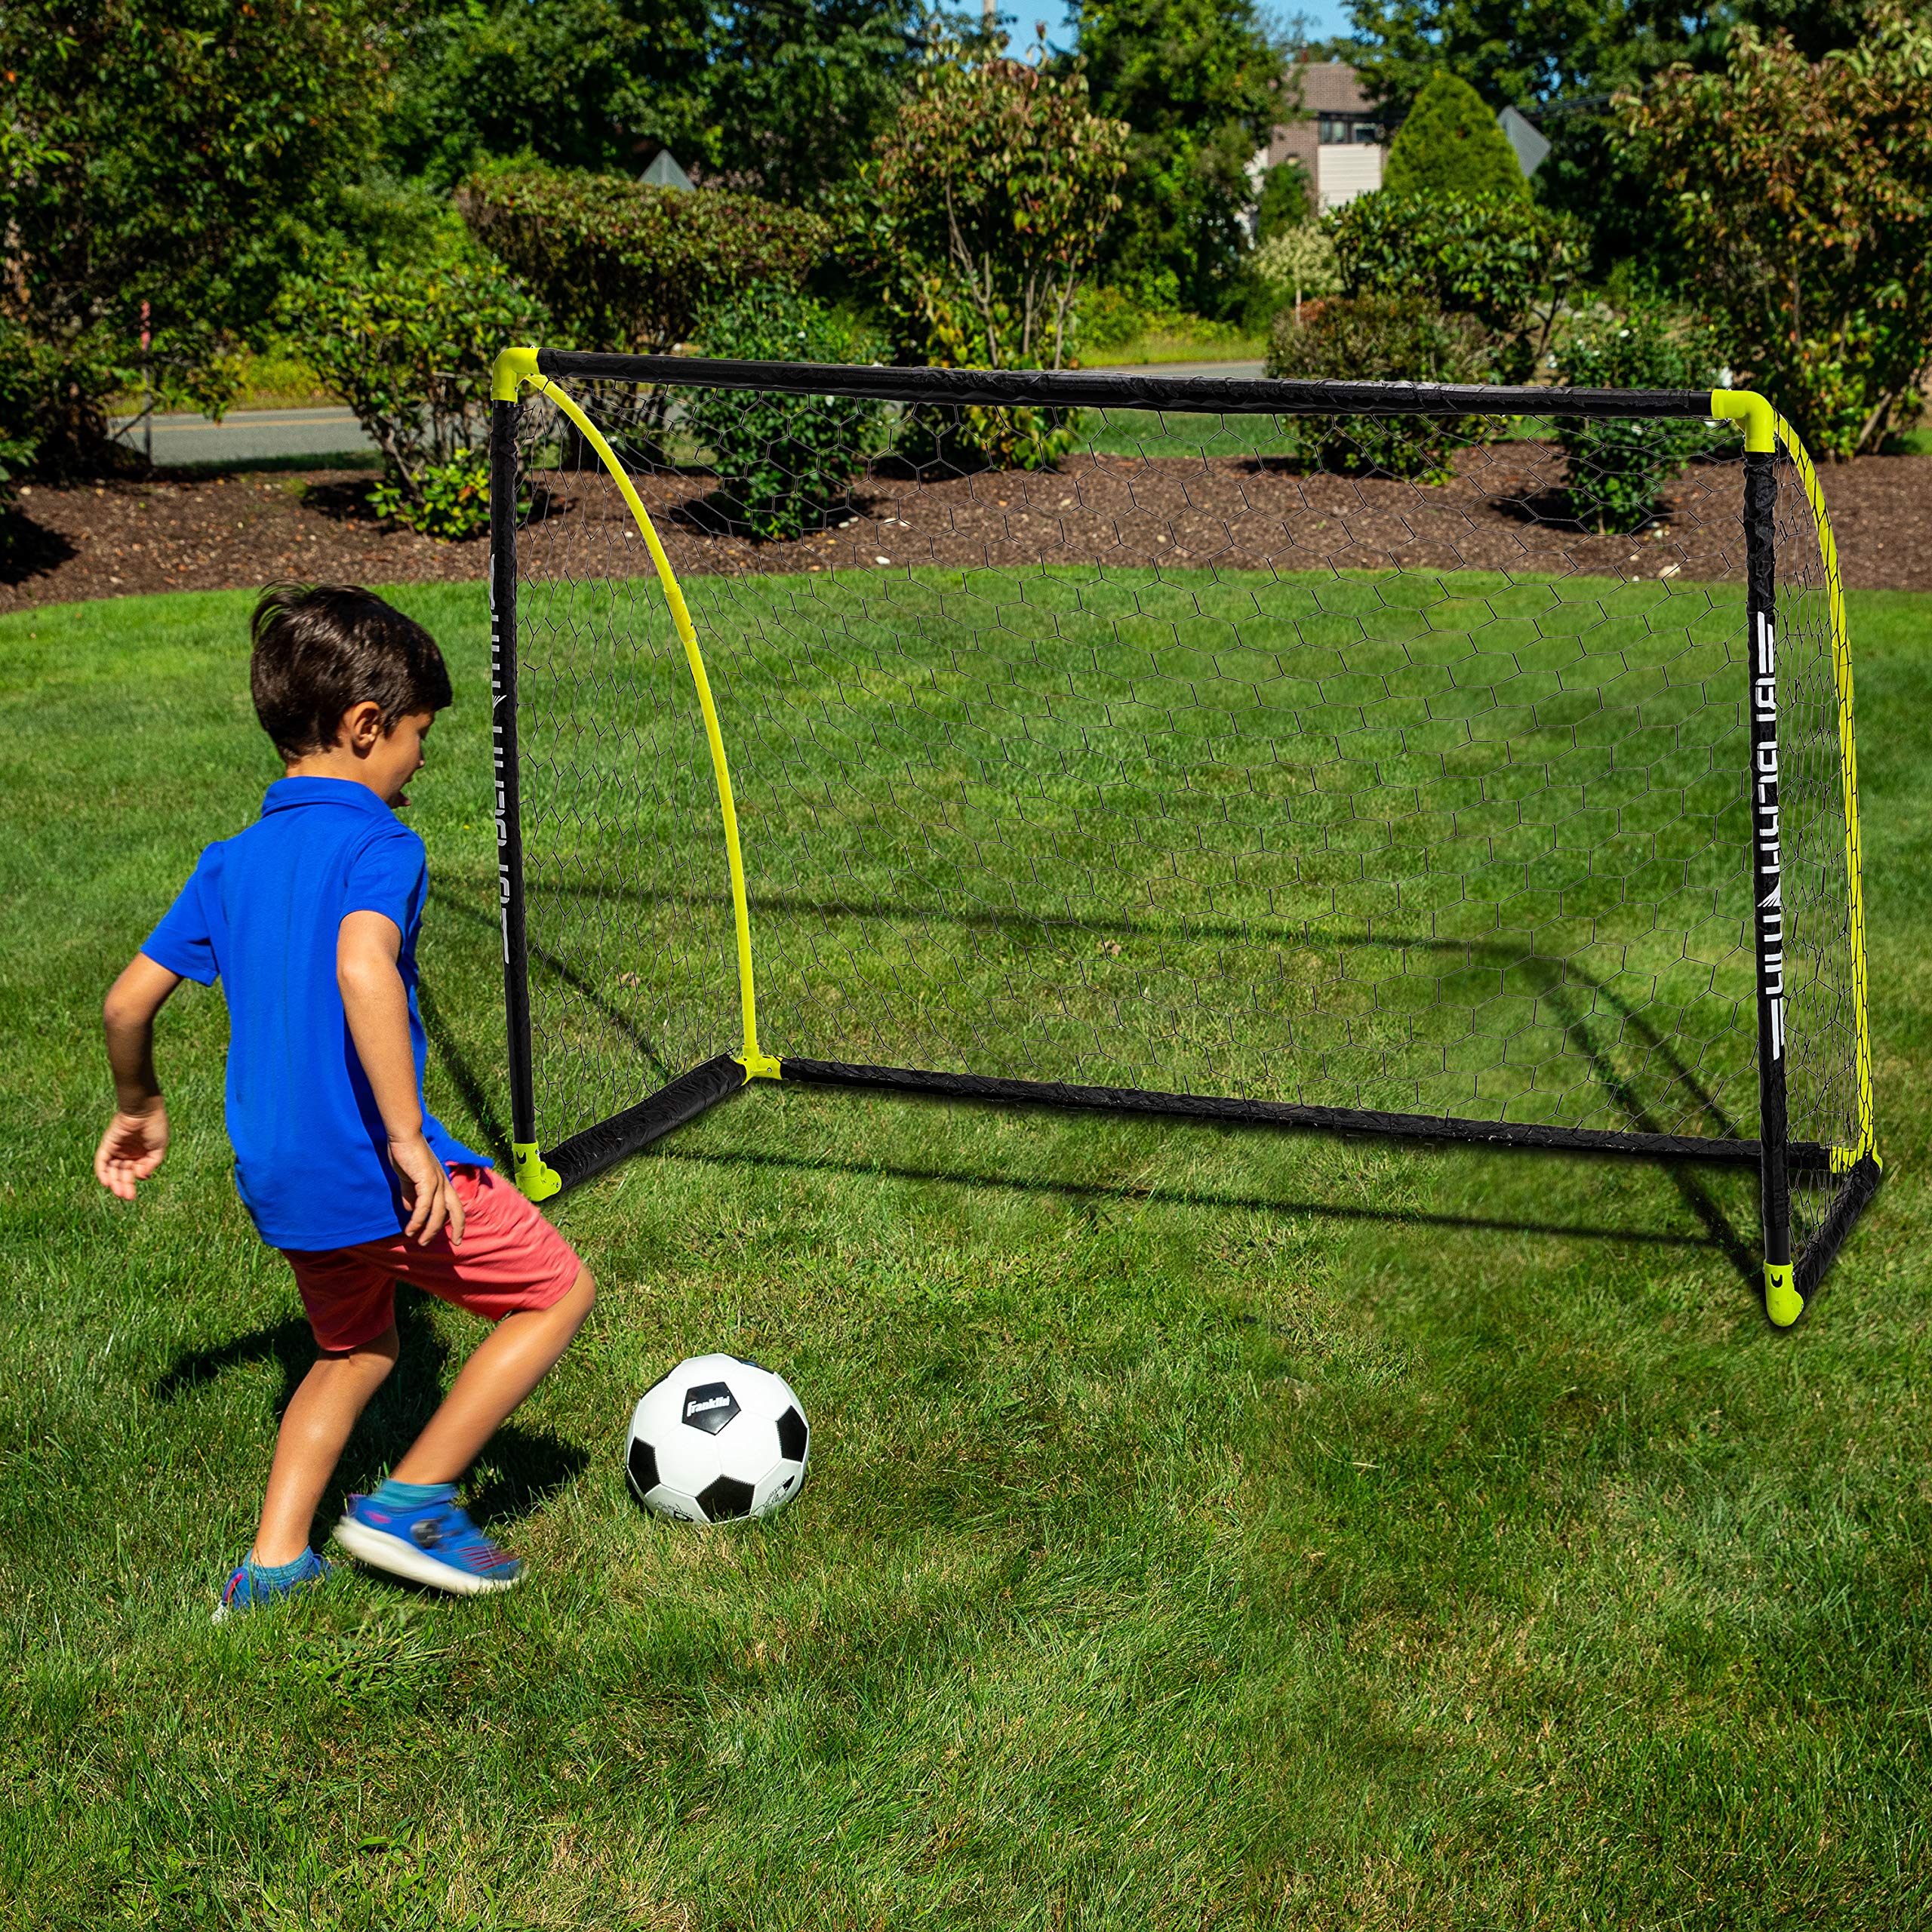 Franklin Sports Portable Soccer Goal - Kids Backyard Soccer Net - 6 x 4 Foot - All-Weather, Durable, Easy Storage - Blackhawk Goal